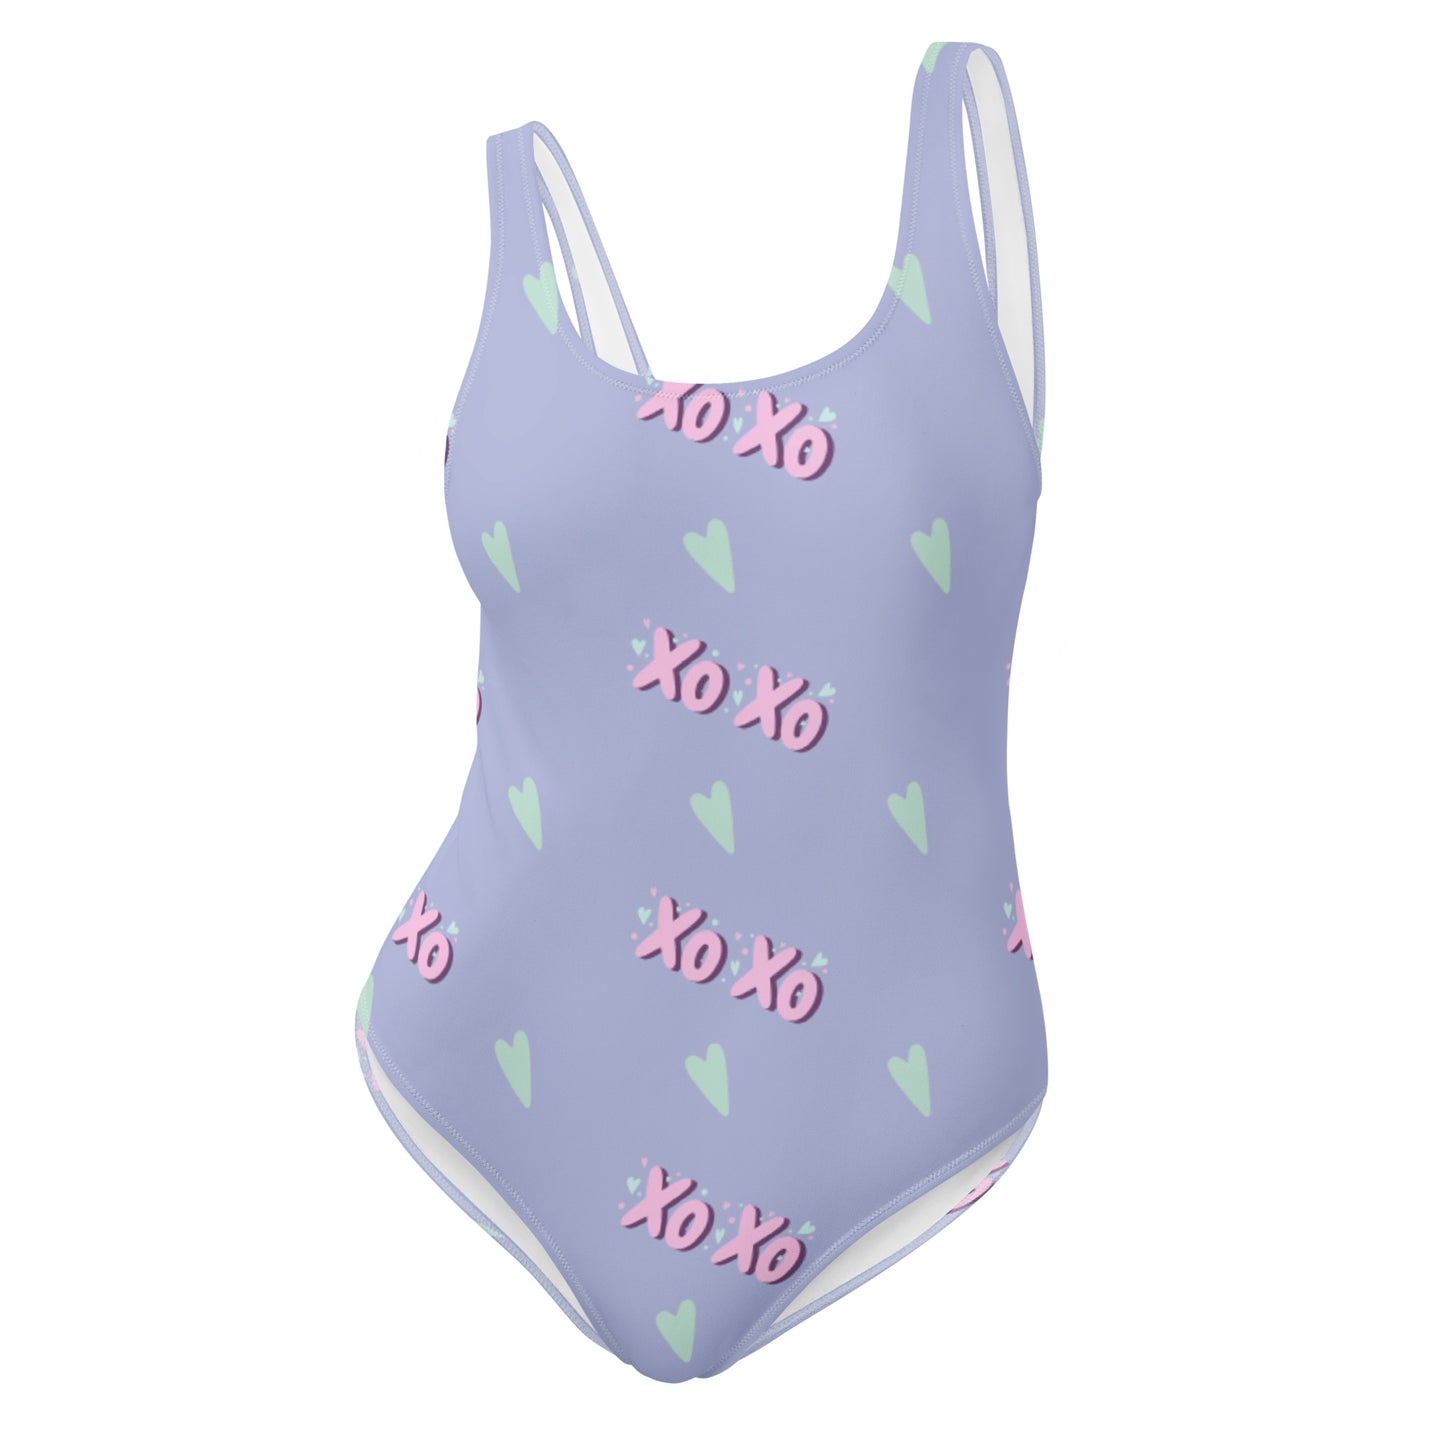 XOXO One-Piece Swimsuit